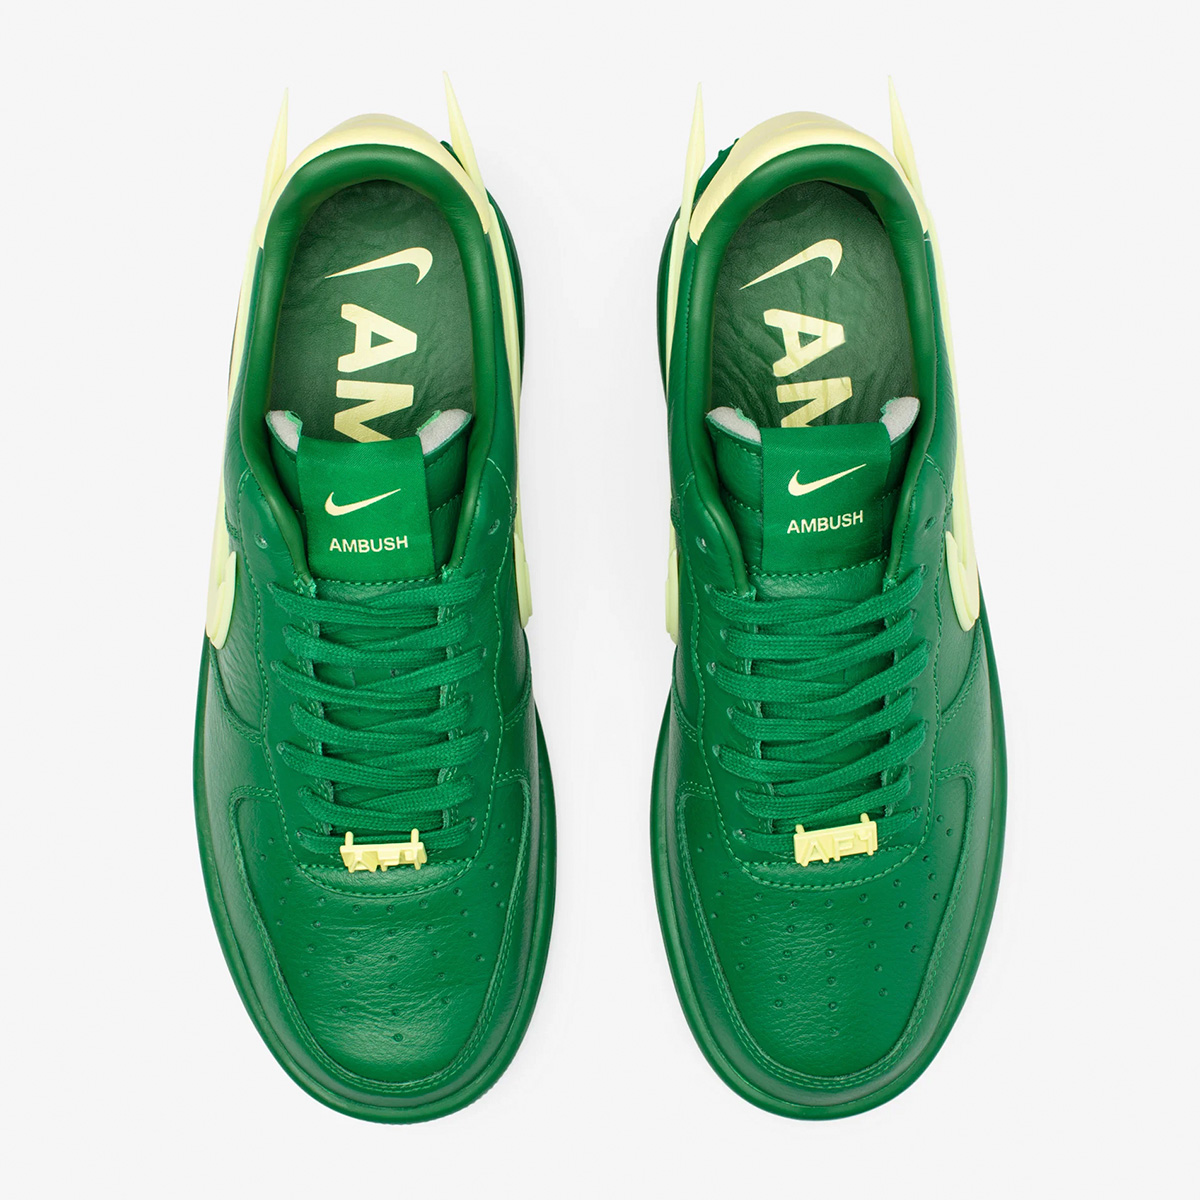 AMBUSH friday Nike Air Force 1 Low Green DV3464 300 Release Date 3